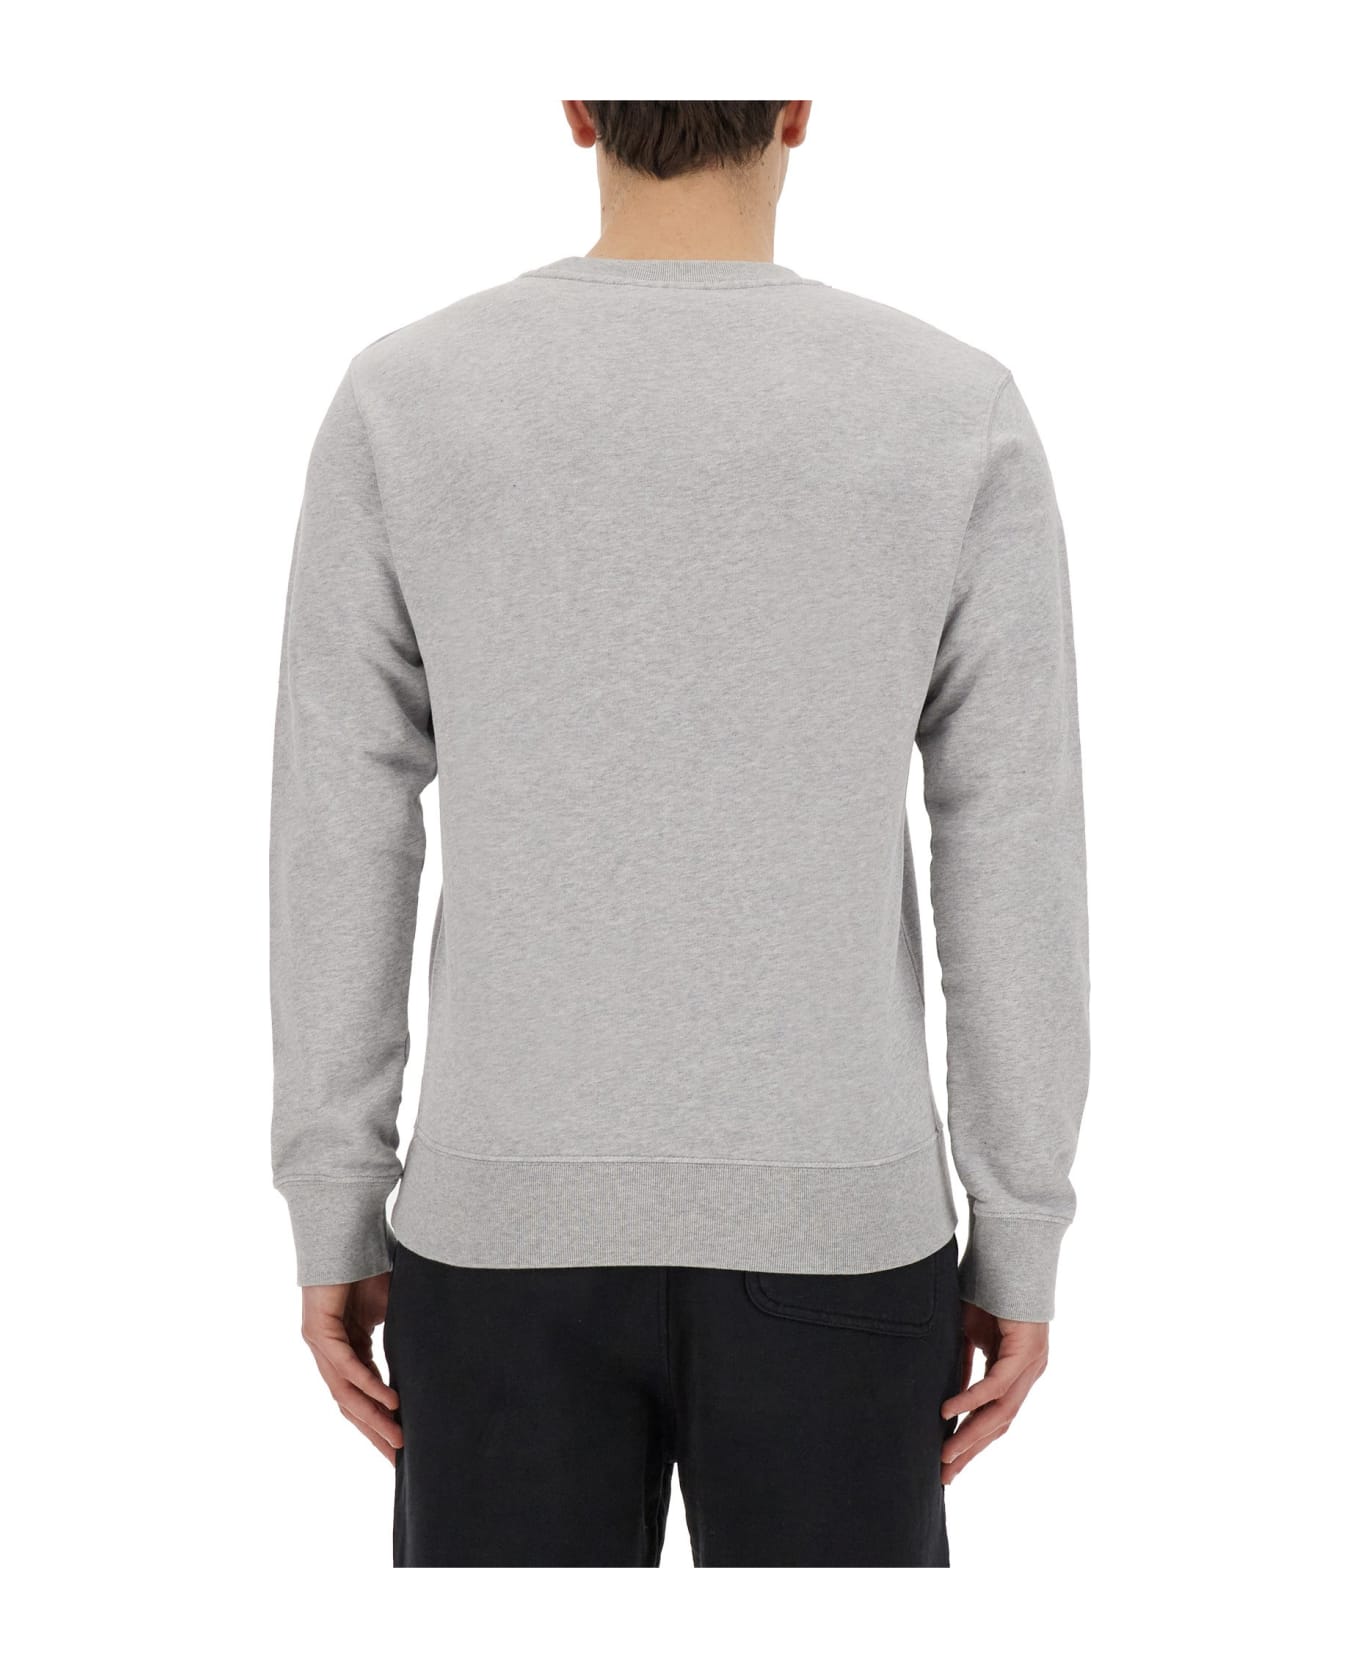 Maison Kitsuné Sweatshirt With Logo - Light grey melange